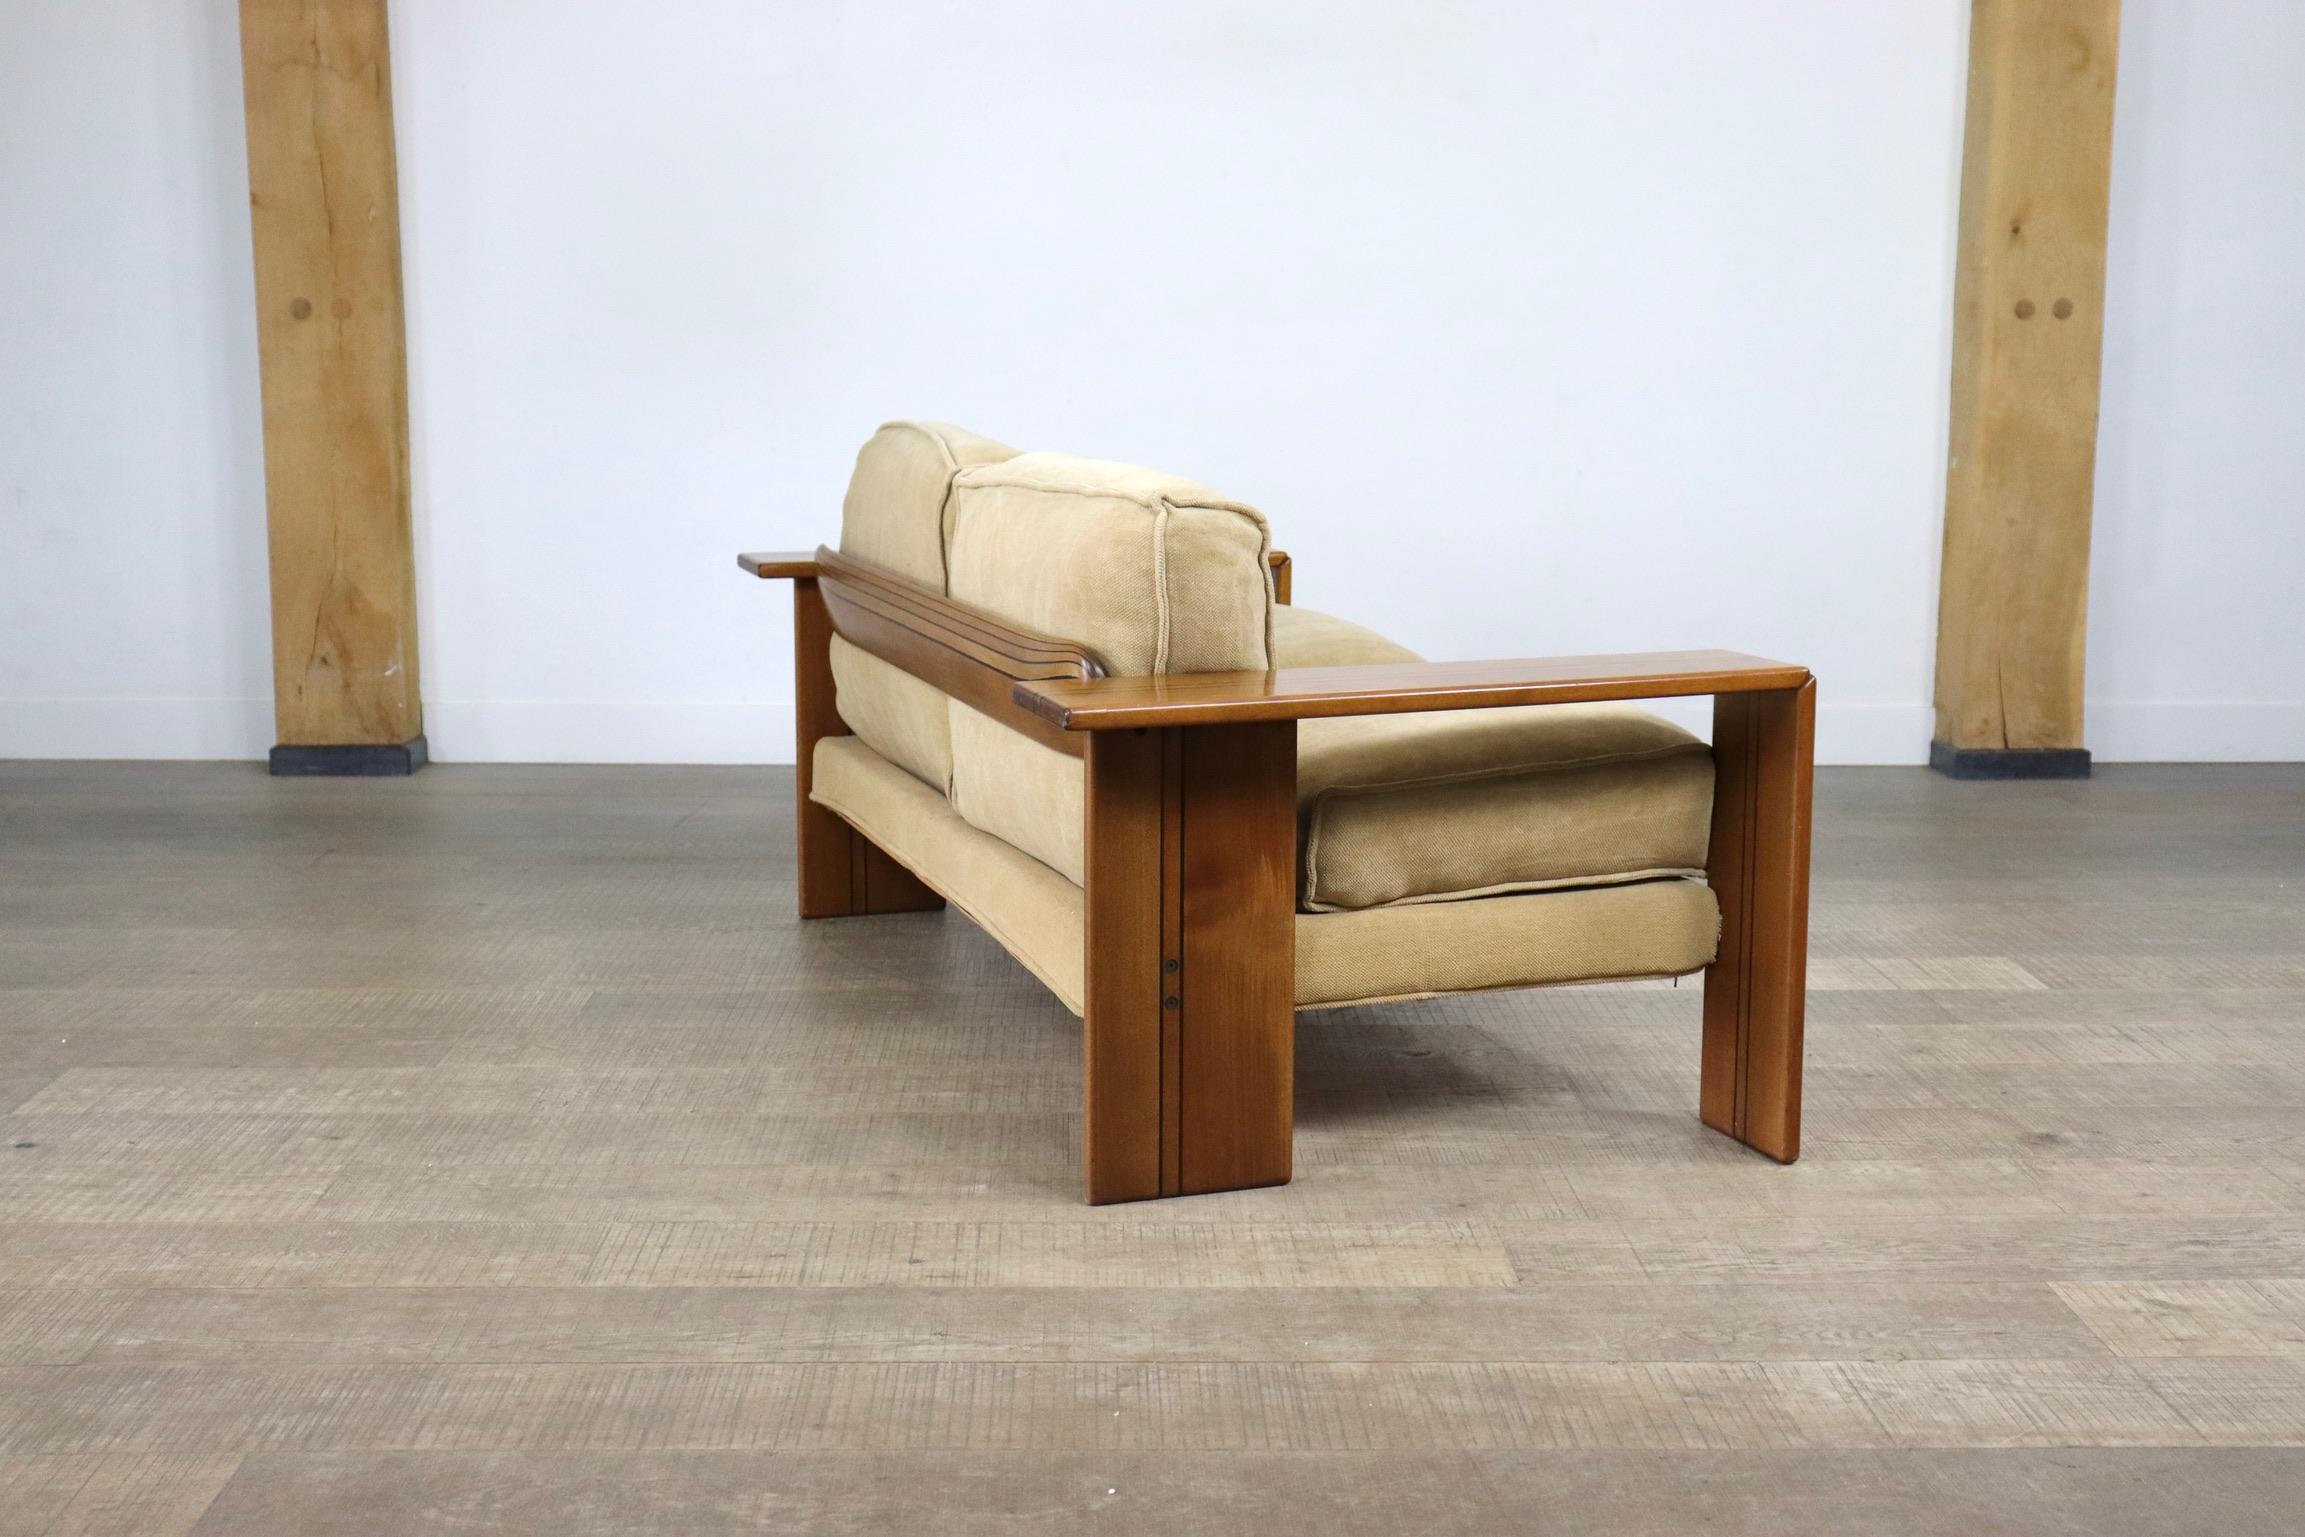 Afra & Tobia Scarpa ‘Artona’ Sofa in Elm and linen for Maxalto, 1975 For Sale 3